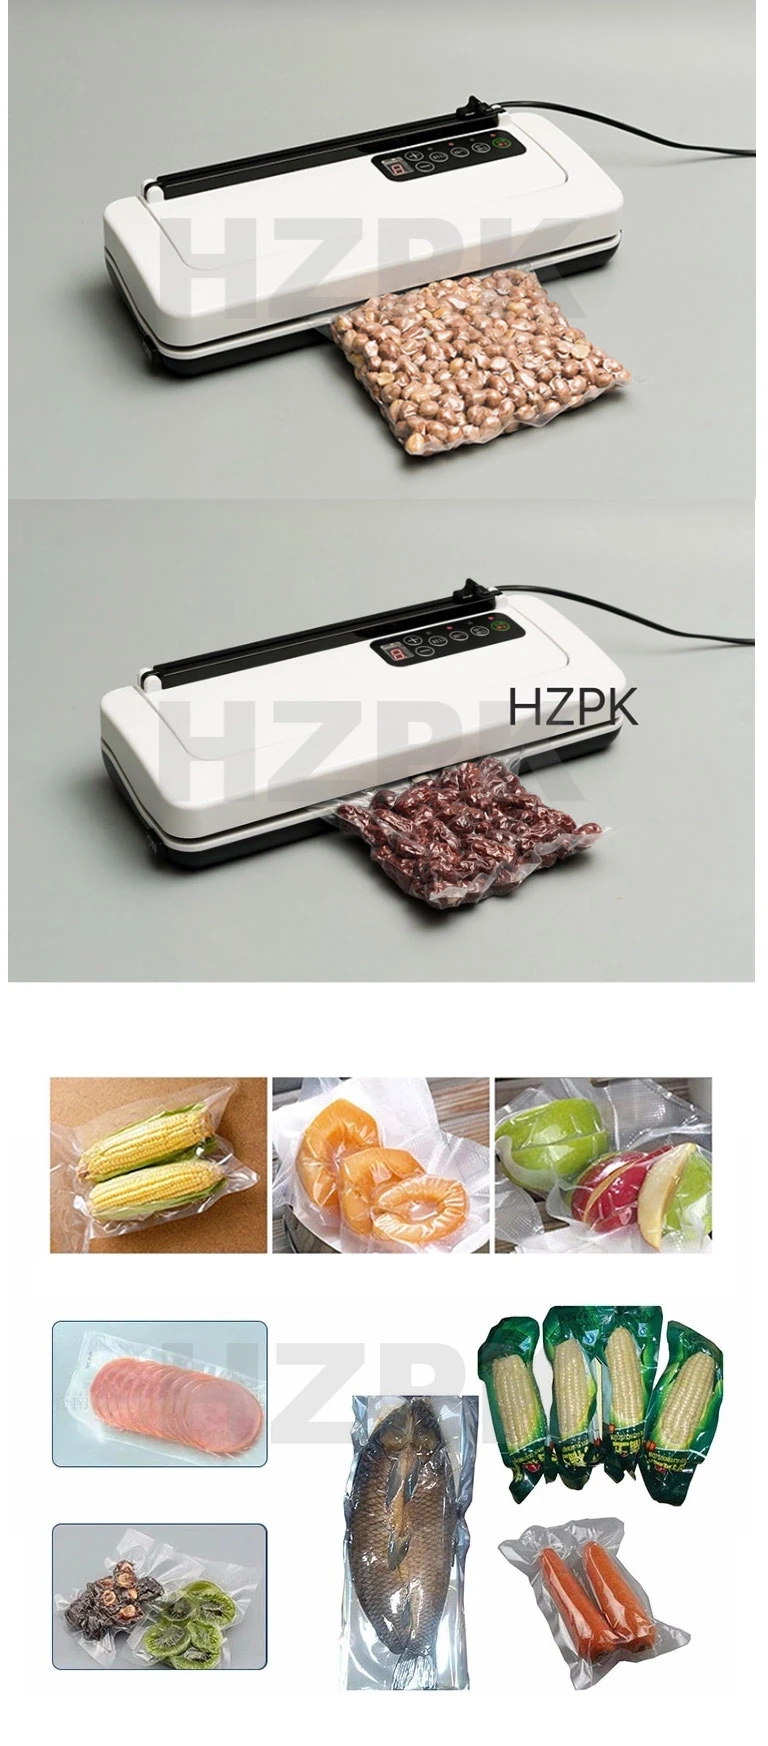 Hzpk Small Sealing Machine Household vacuum Packing Machines Vacuum Food Sealers